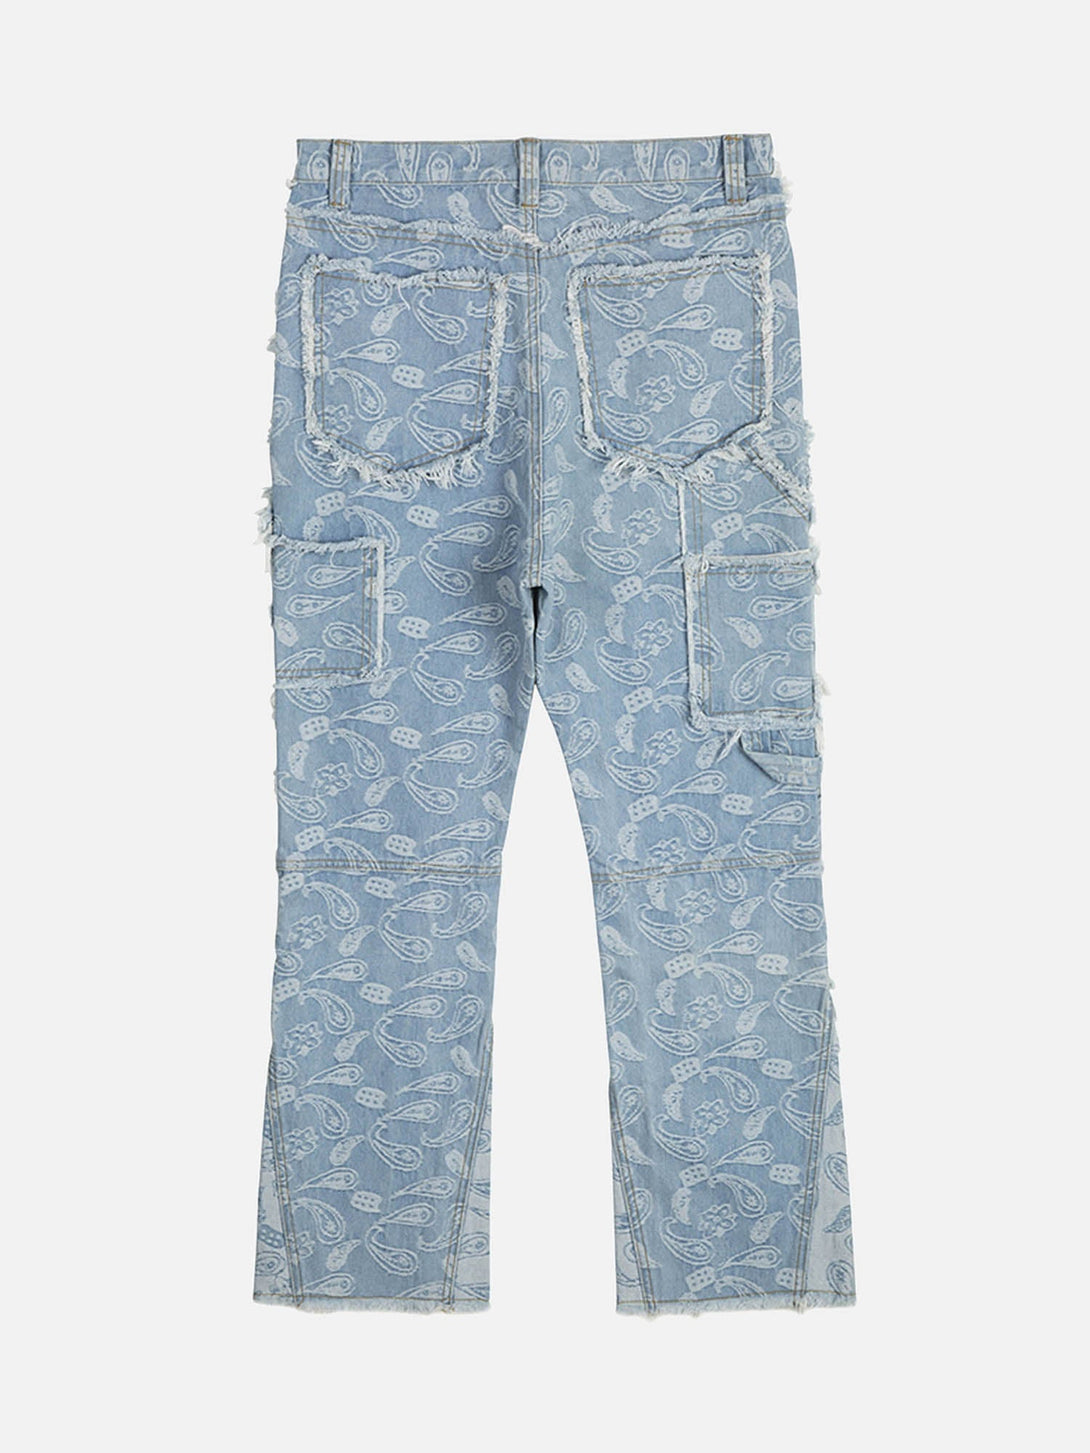 Majesda® - Cashew Flower Cut Jeans- Outfit Ideas - Streetwear Fashion - majesda.com